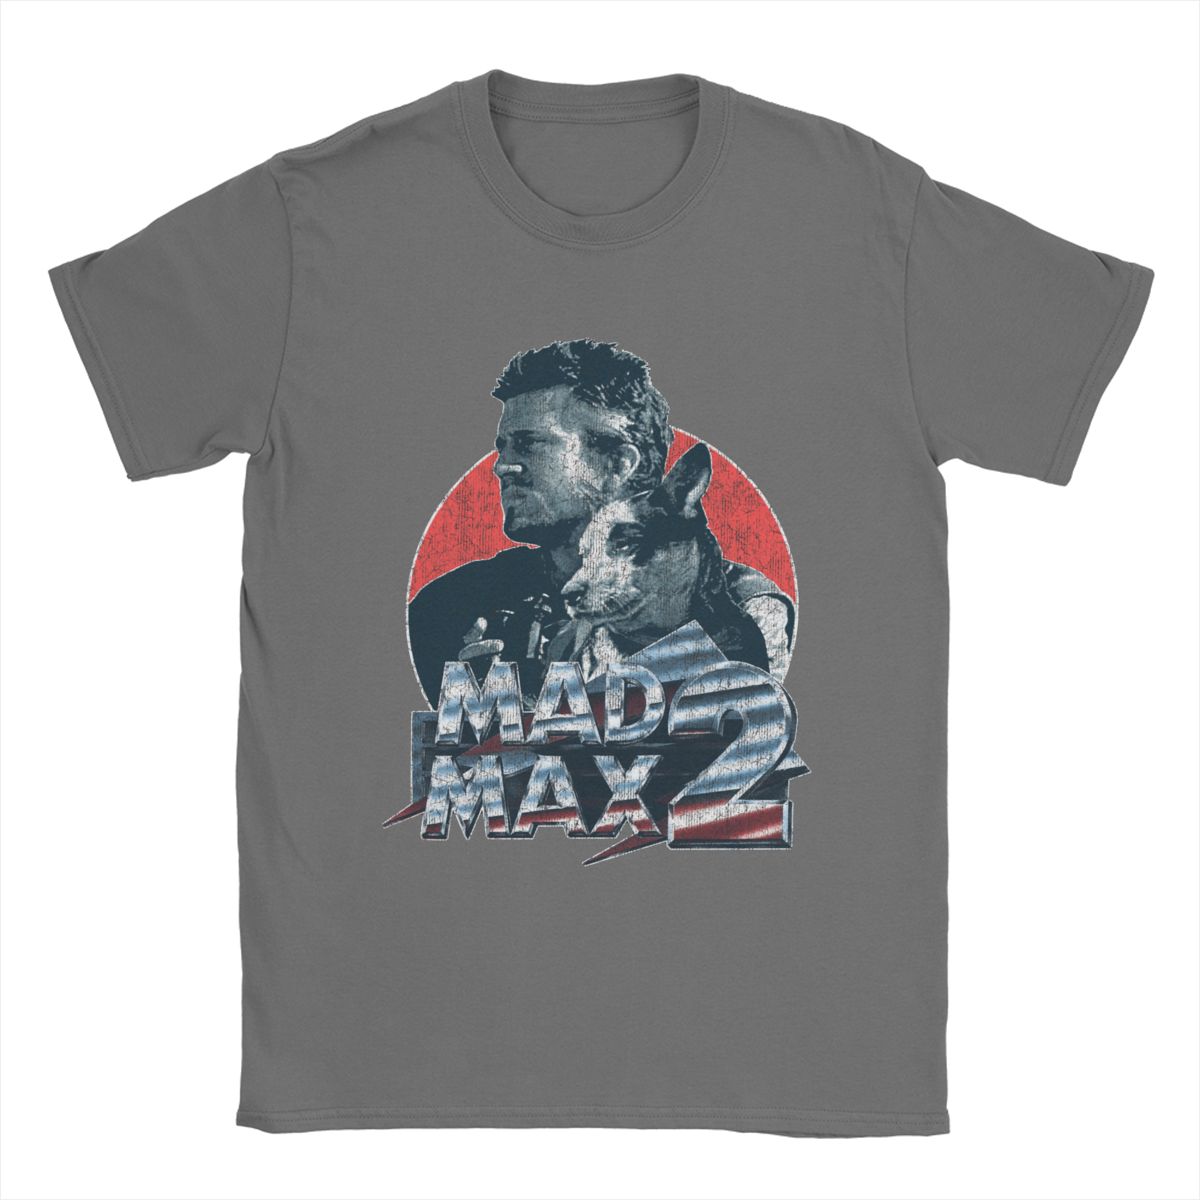 Mad Max - T-Shirt 100% Cotton - Classic 1980's Action - Movie Buff Fanwear-Dark Grey-S-